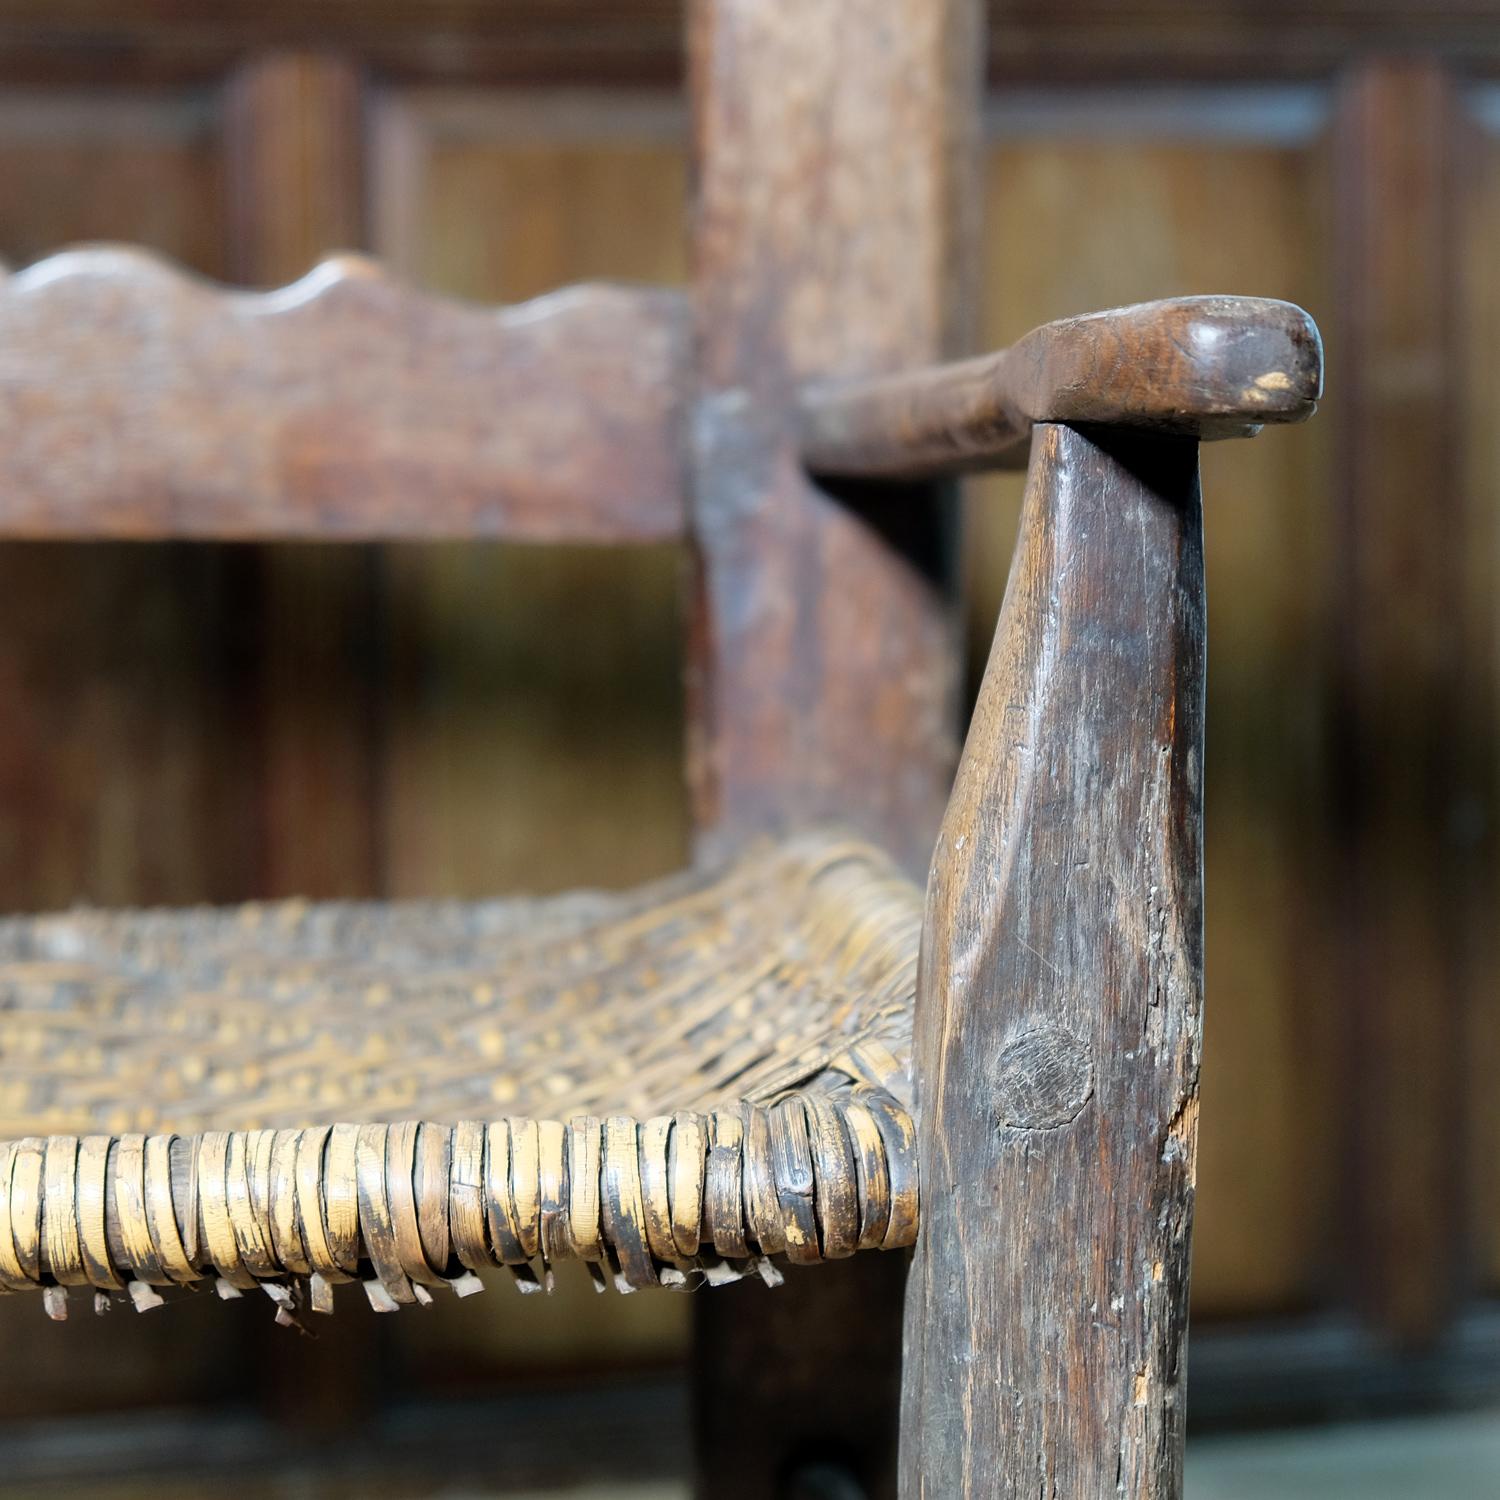 19th Century Rustic European Folk Art Chair, Vernacular and Primitive, Woven Seat